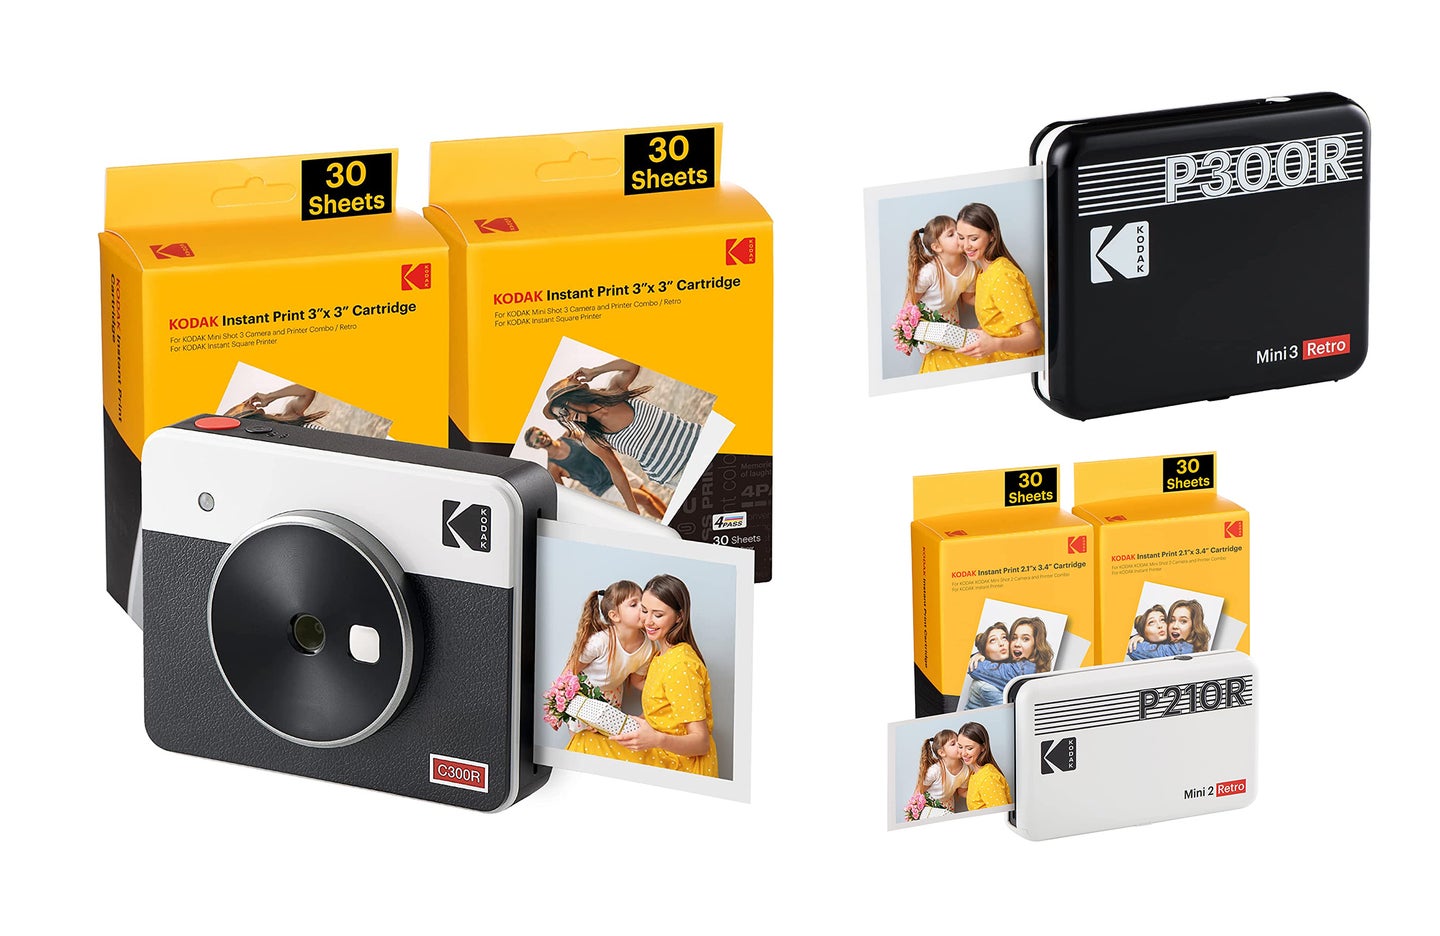 Kodak mobile photo printers